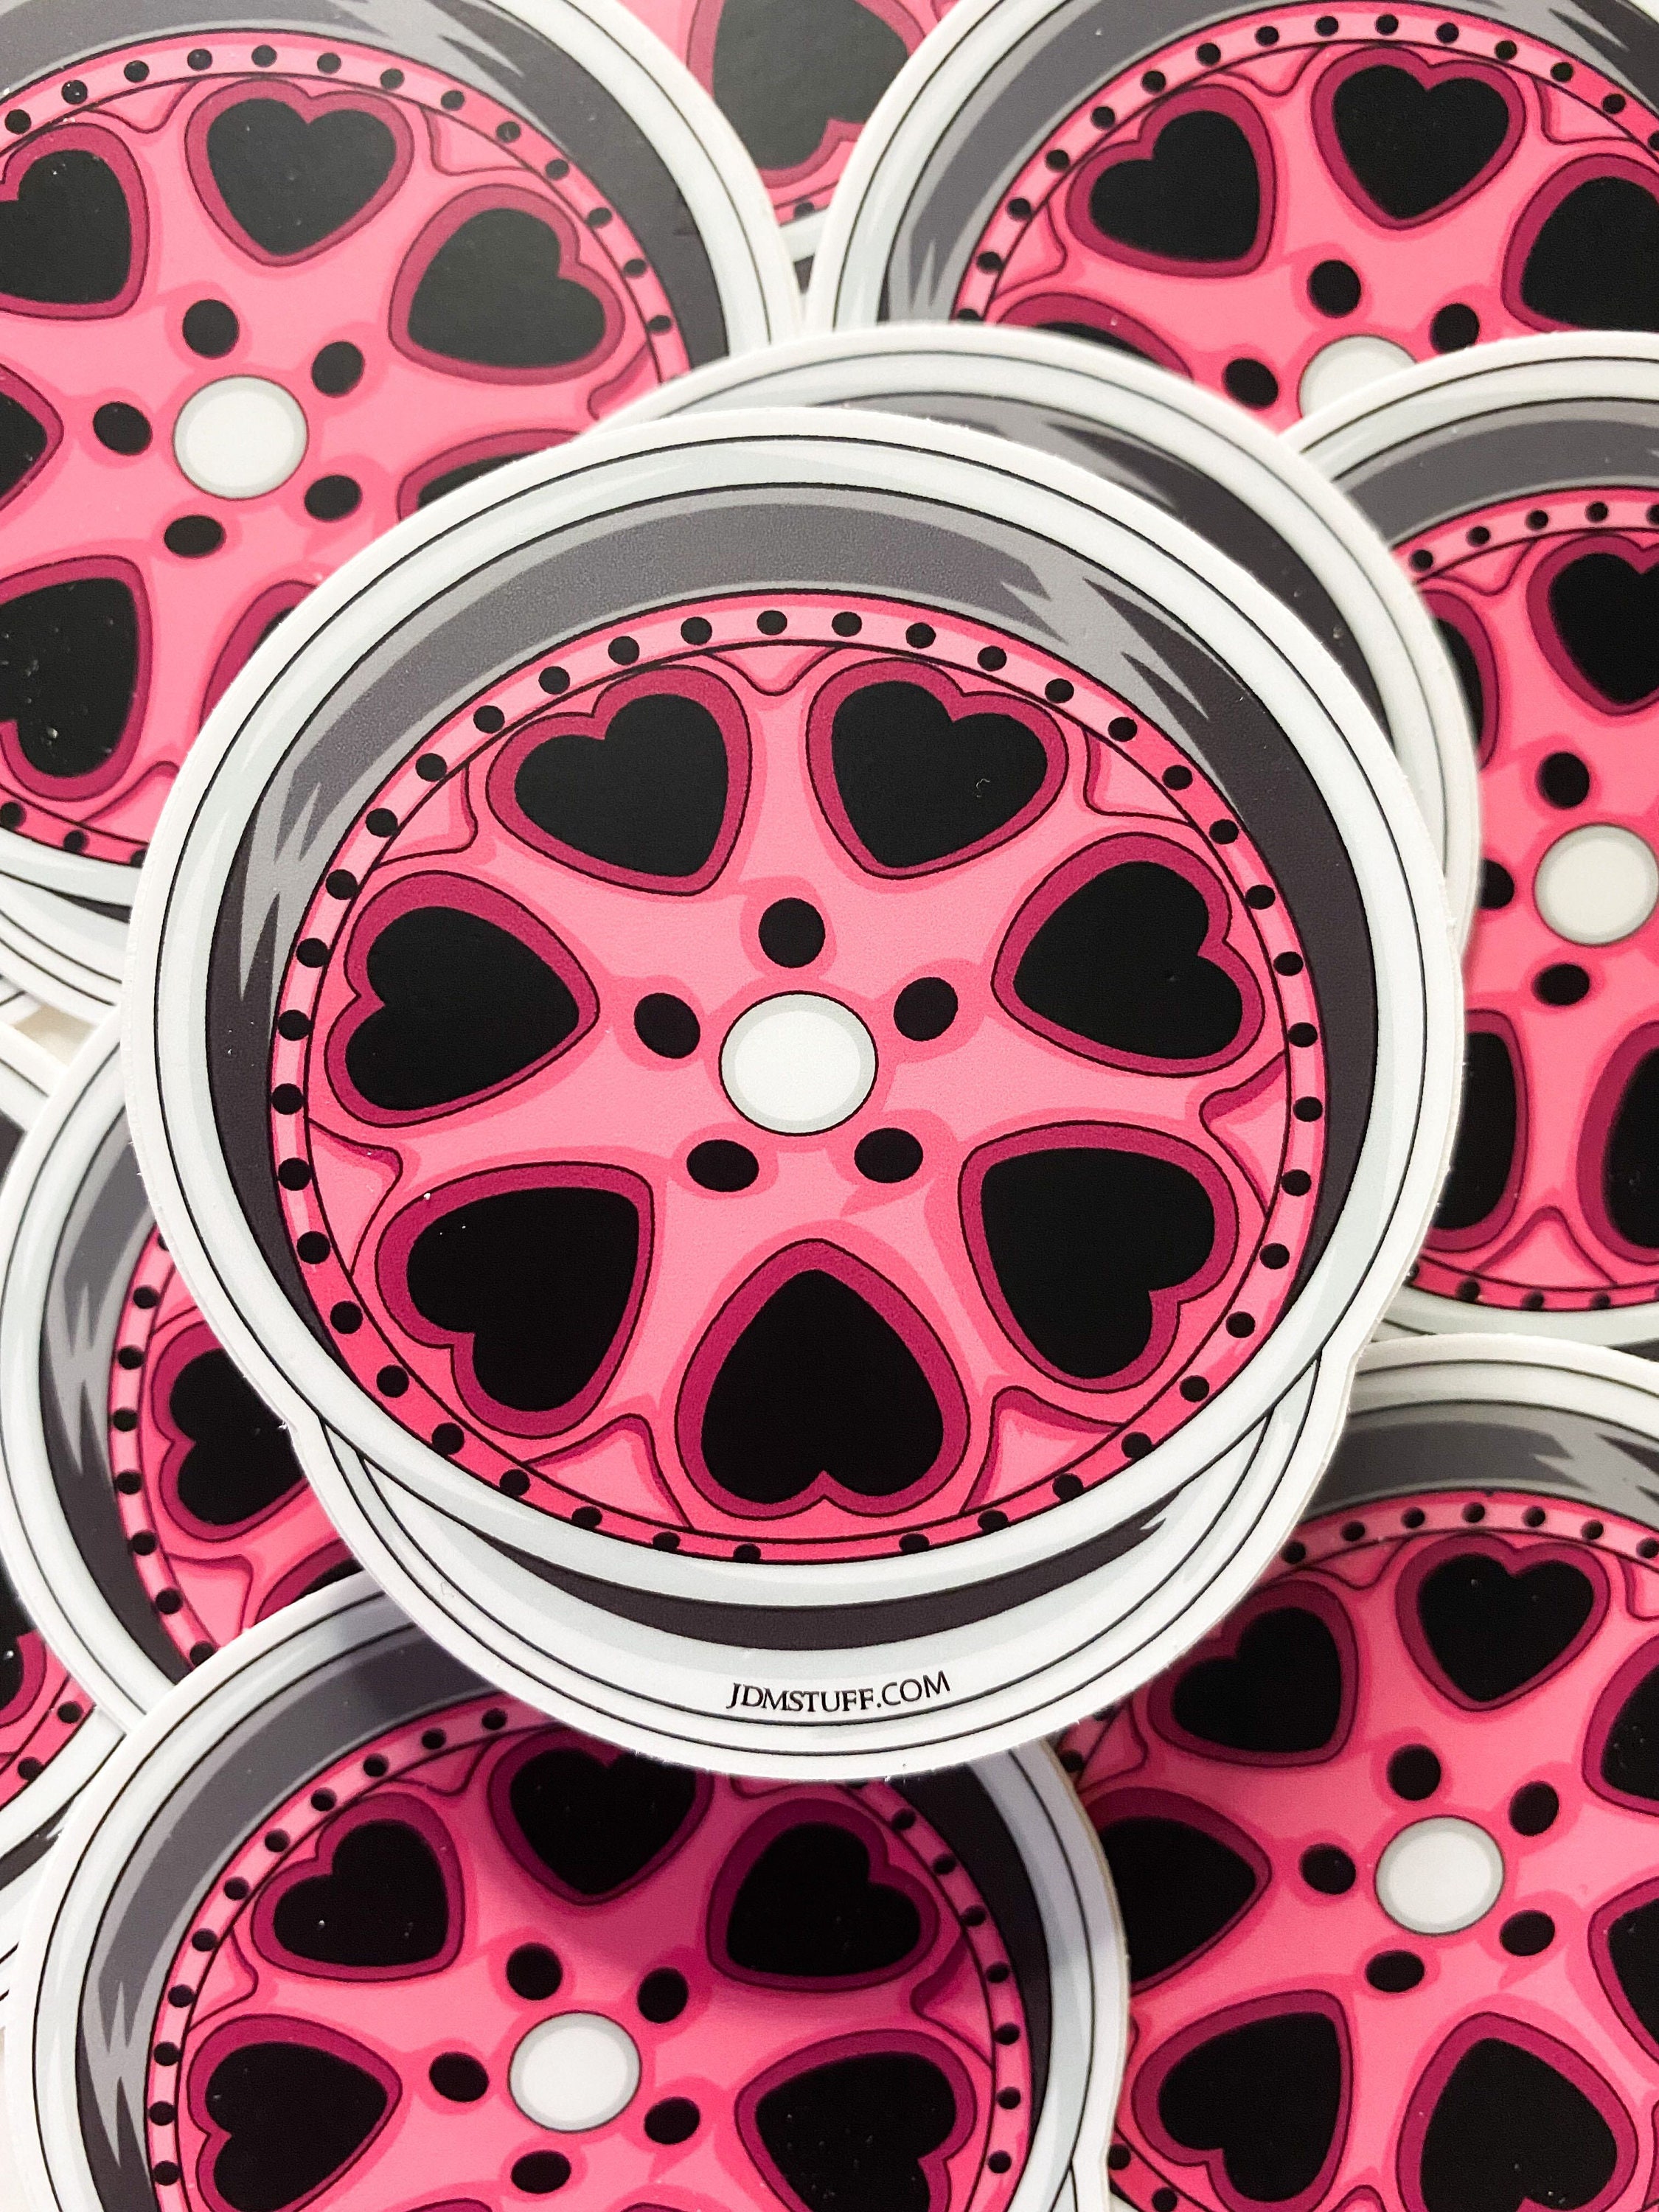 JDM Heritage KOKORO Pink Heart Wheel Vinyl Stickers | Etsy